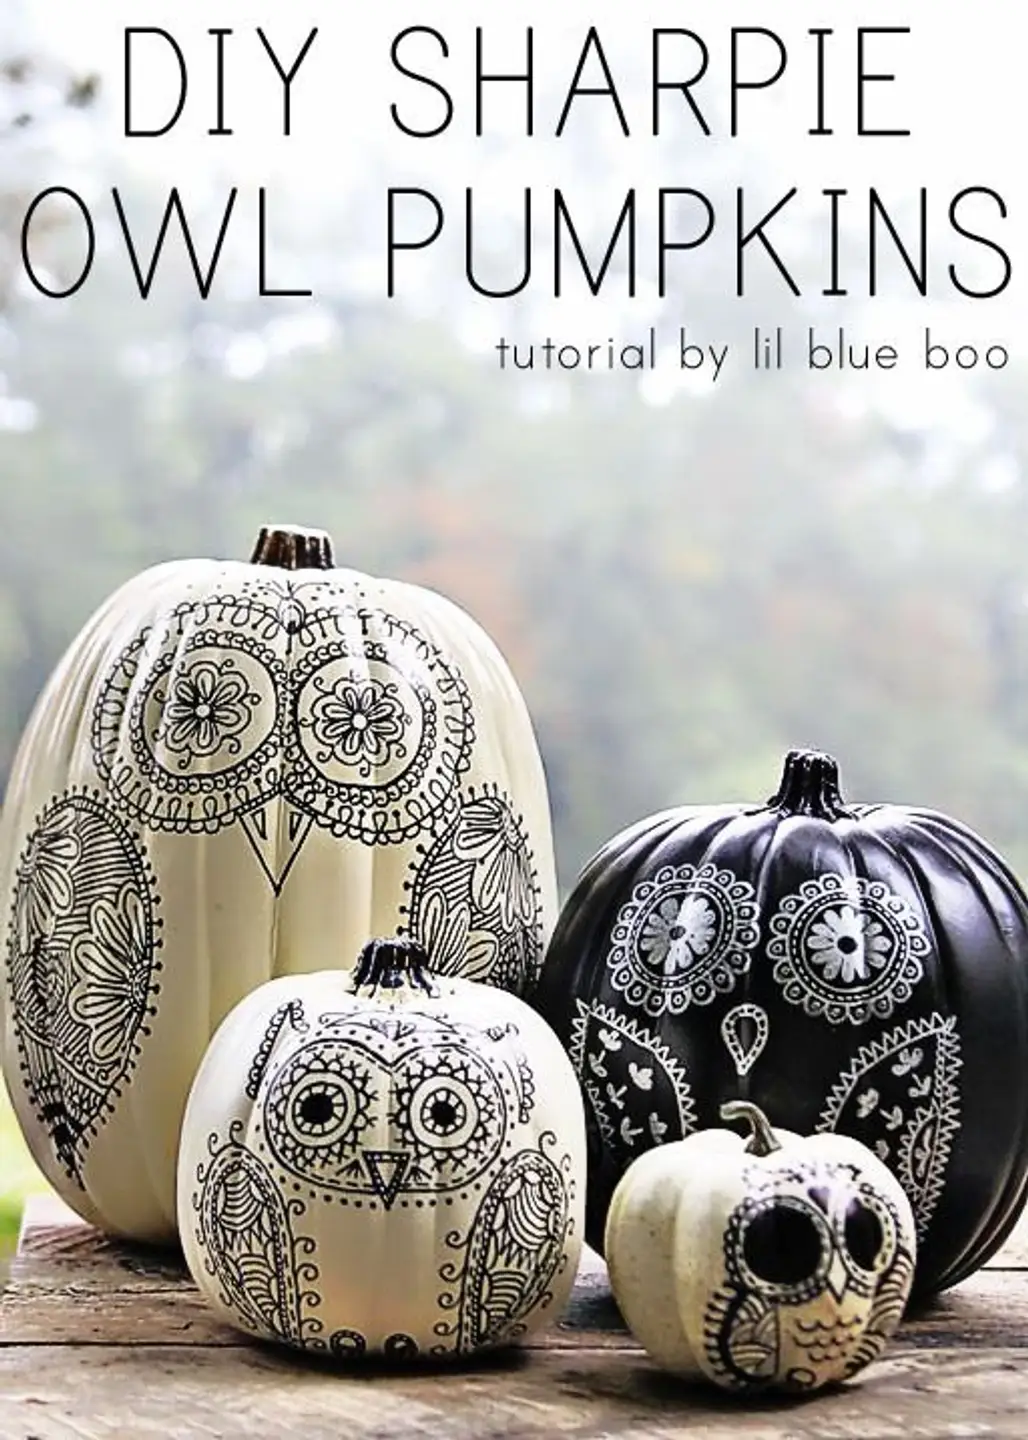 DIY Sharpie Owl Pumpkins